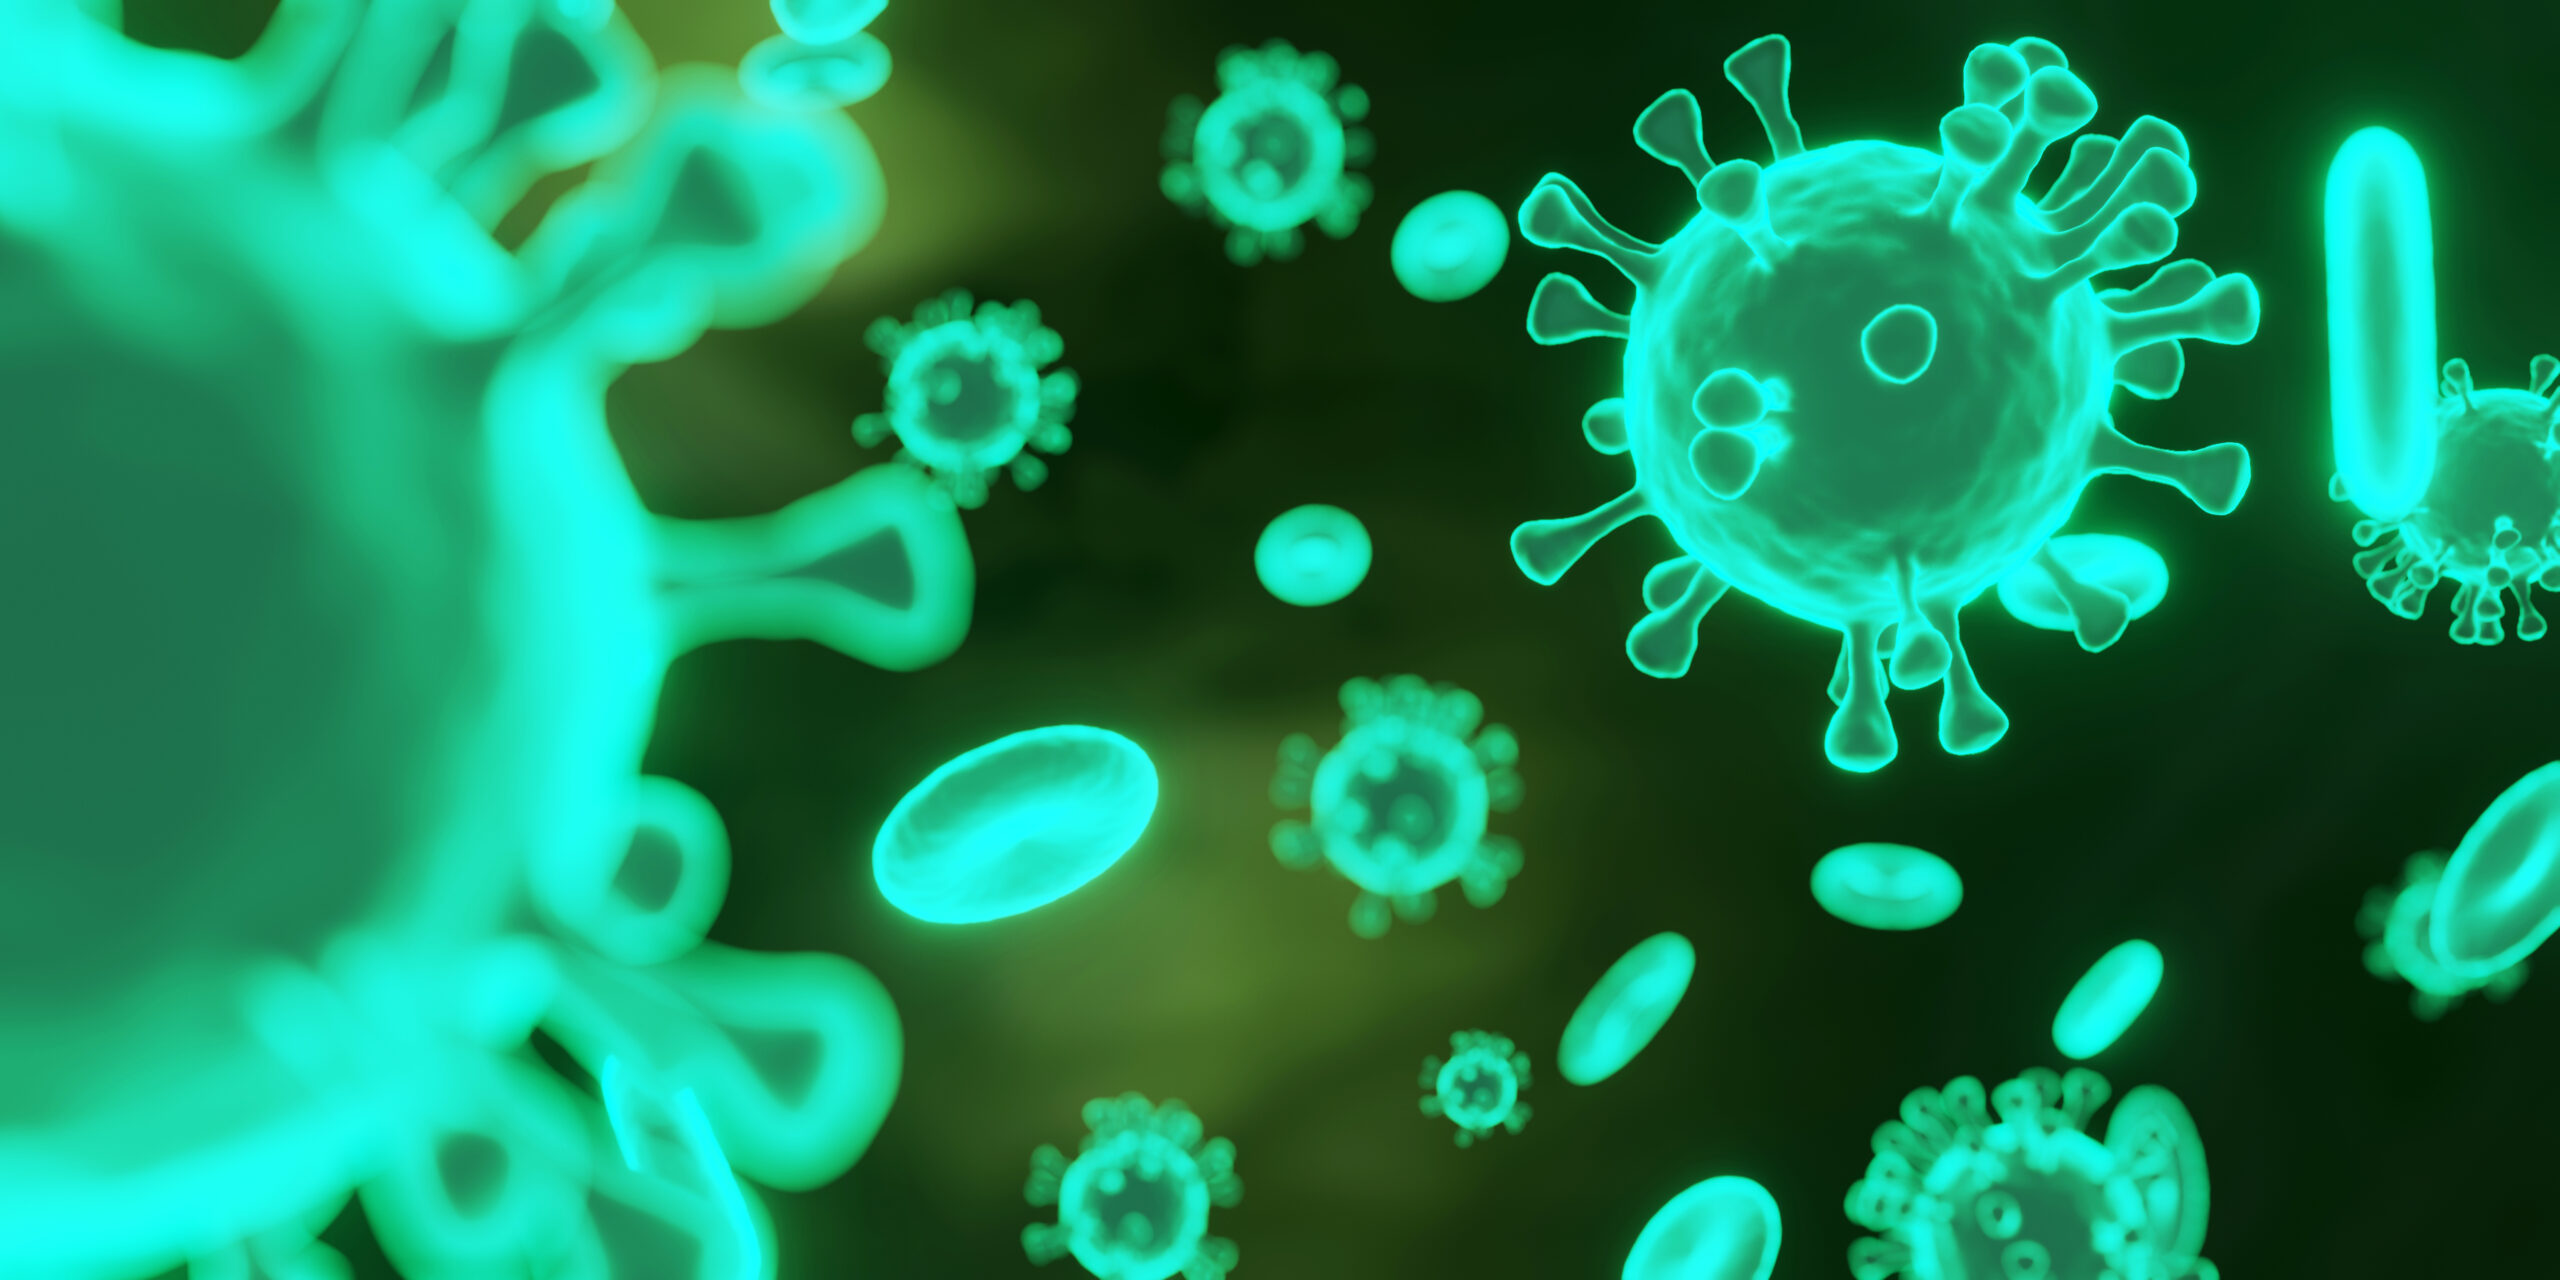 Coronavirus glows green among red blood cells.